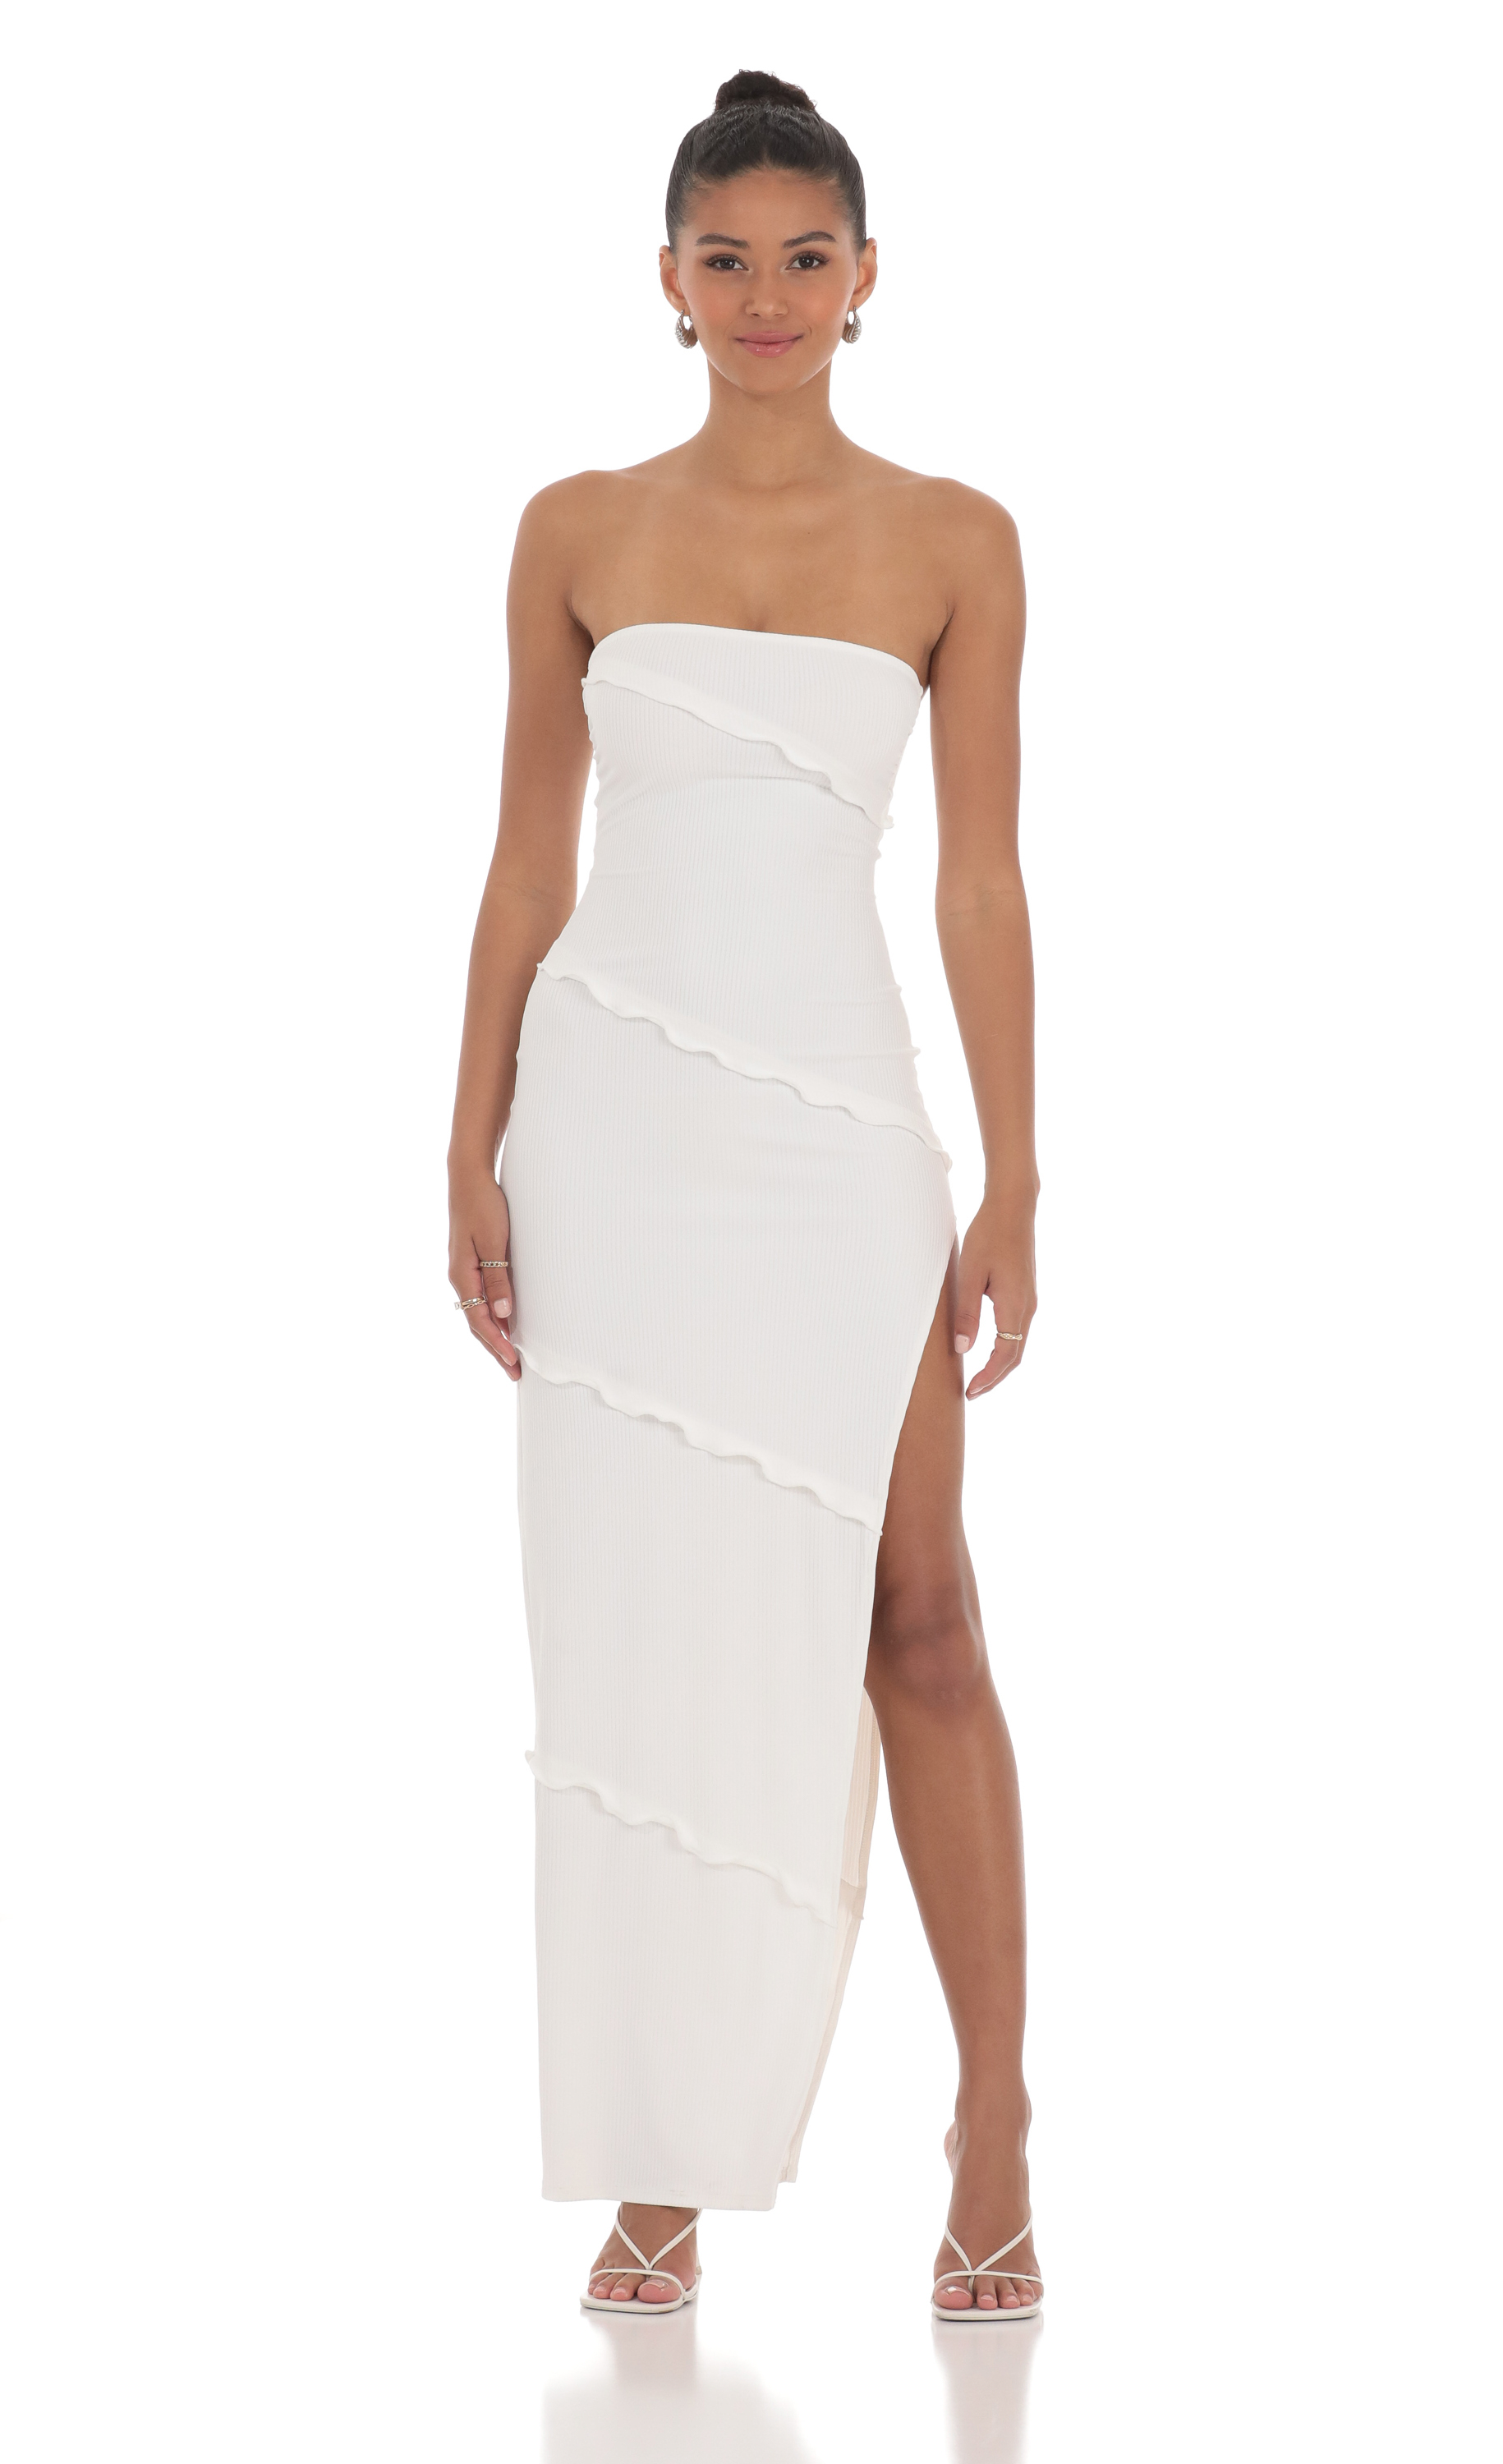 Ruffle Strapless Dress in White